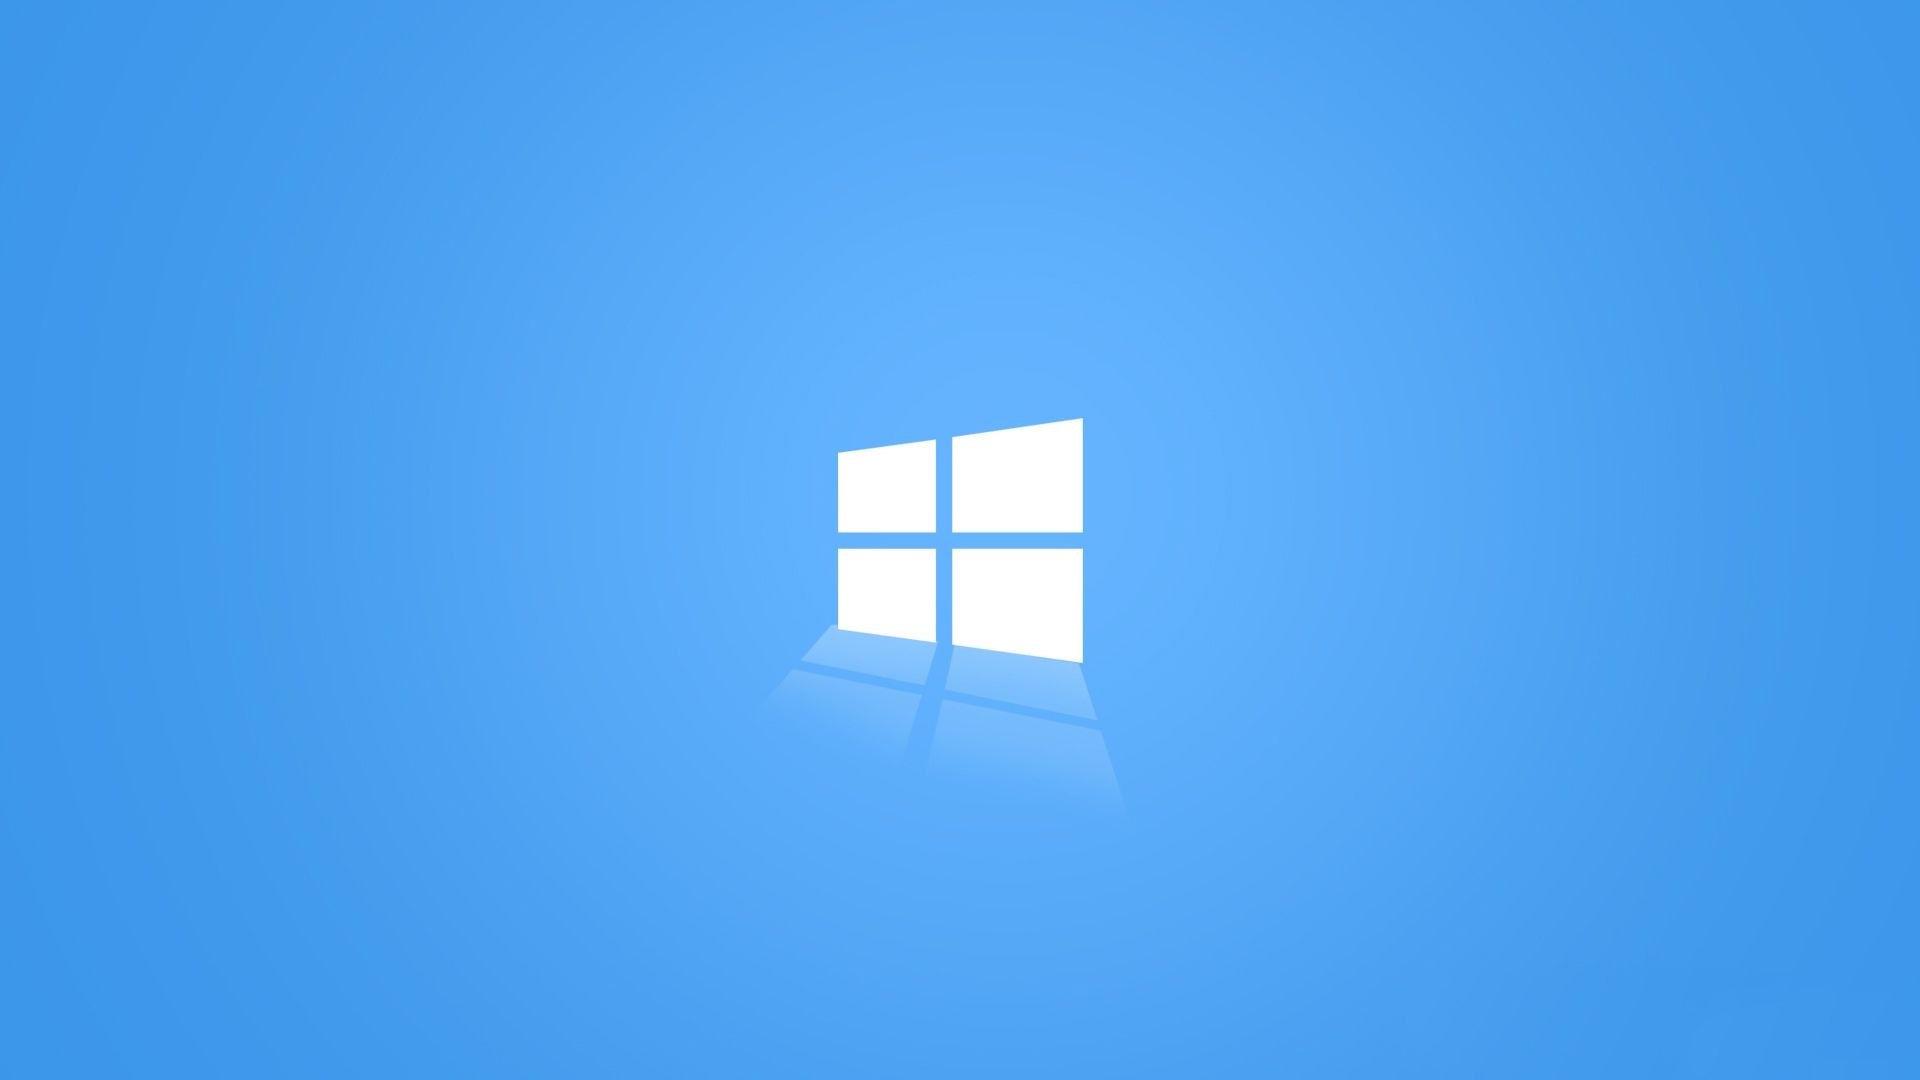 Windows 10 merge. [3840x2160]  Wallpaper windows 10, Microsoft wallpaper, Windows  wallpaper